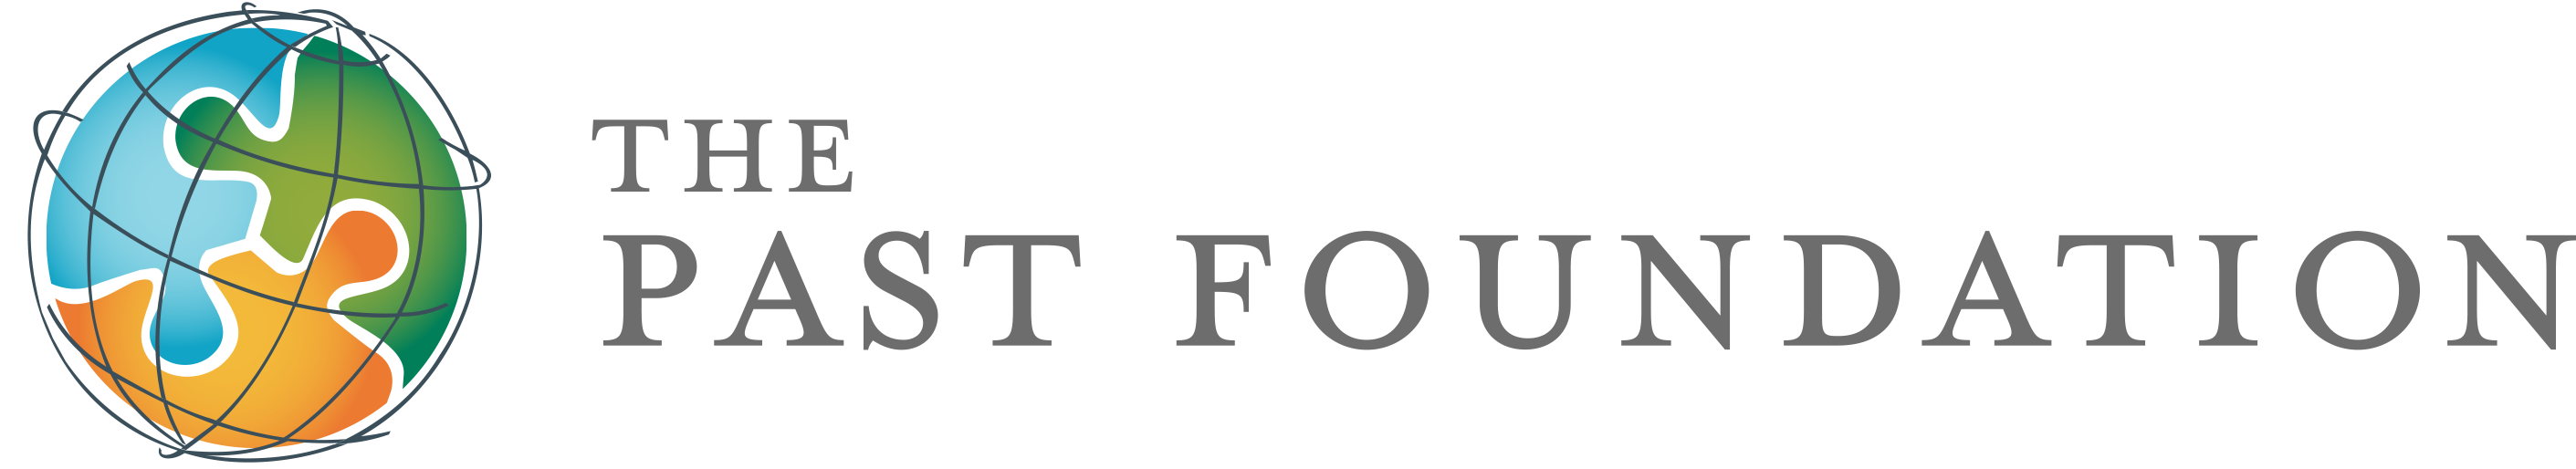 PAST Foundation logo